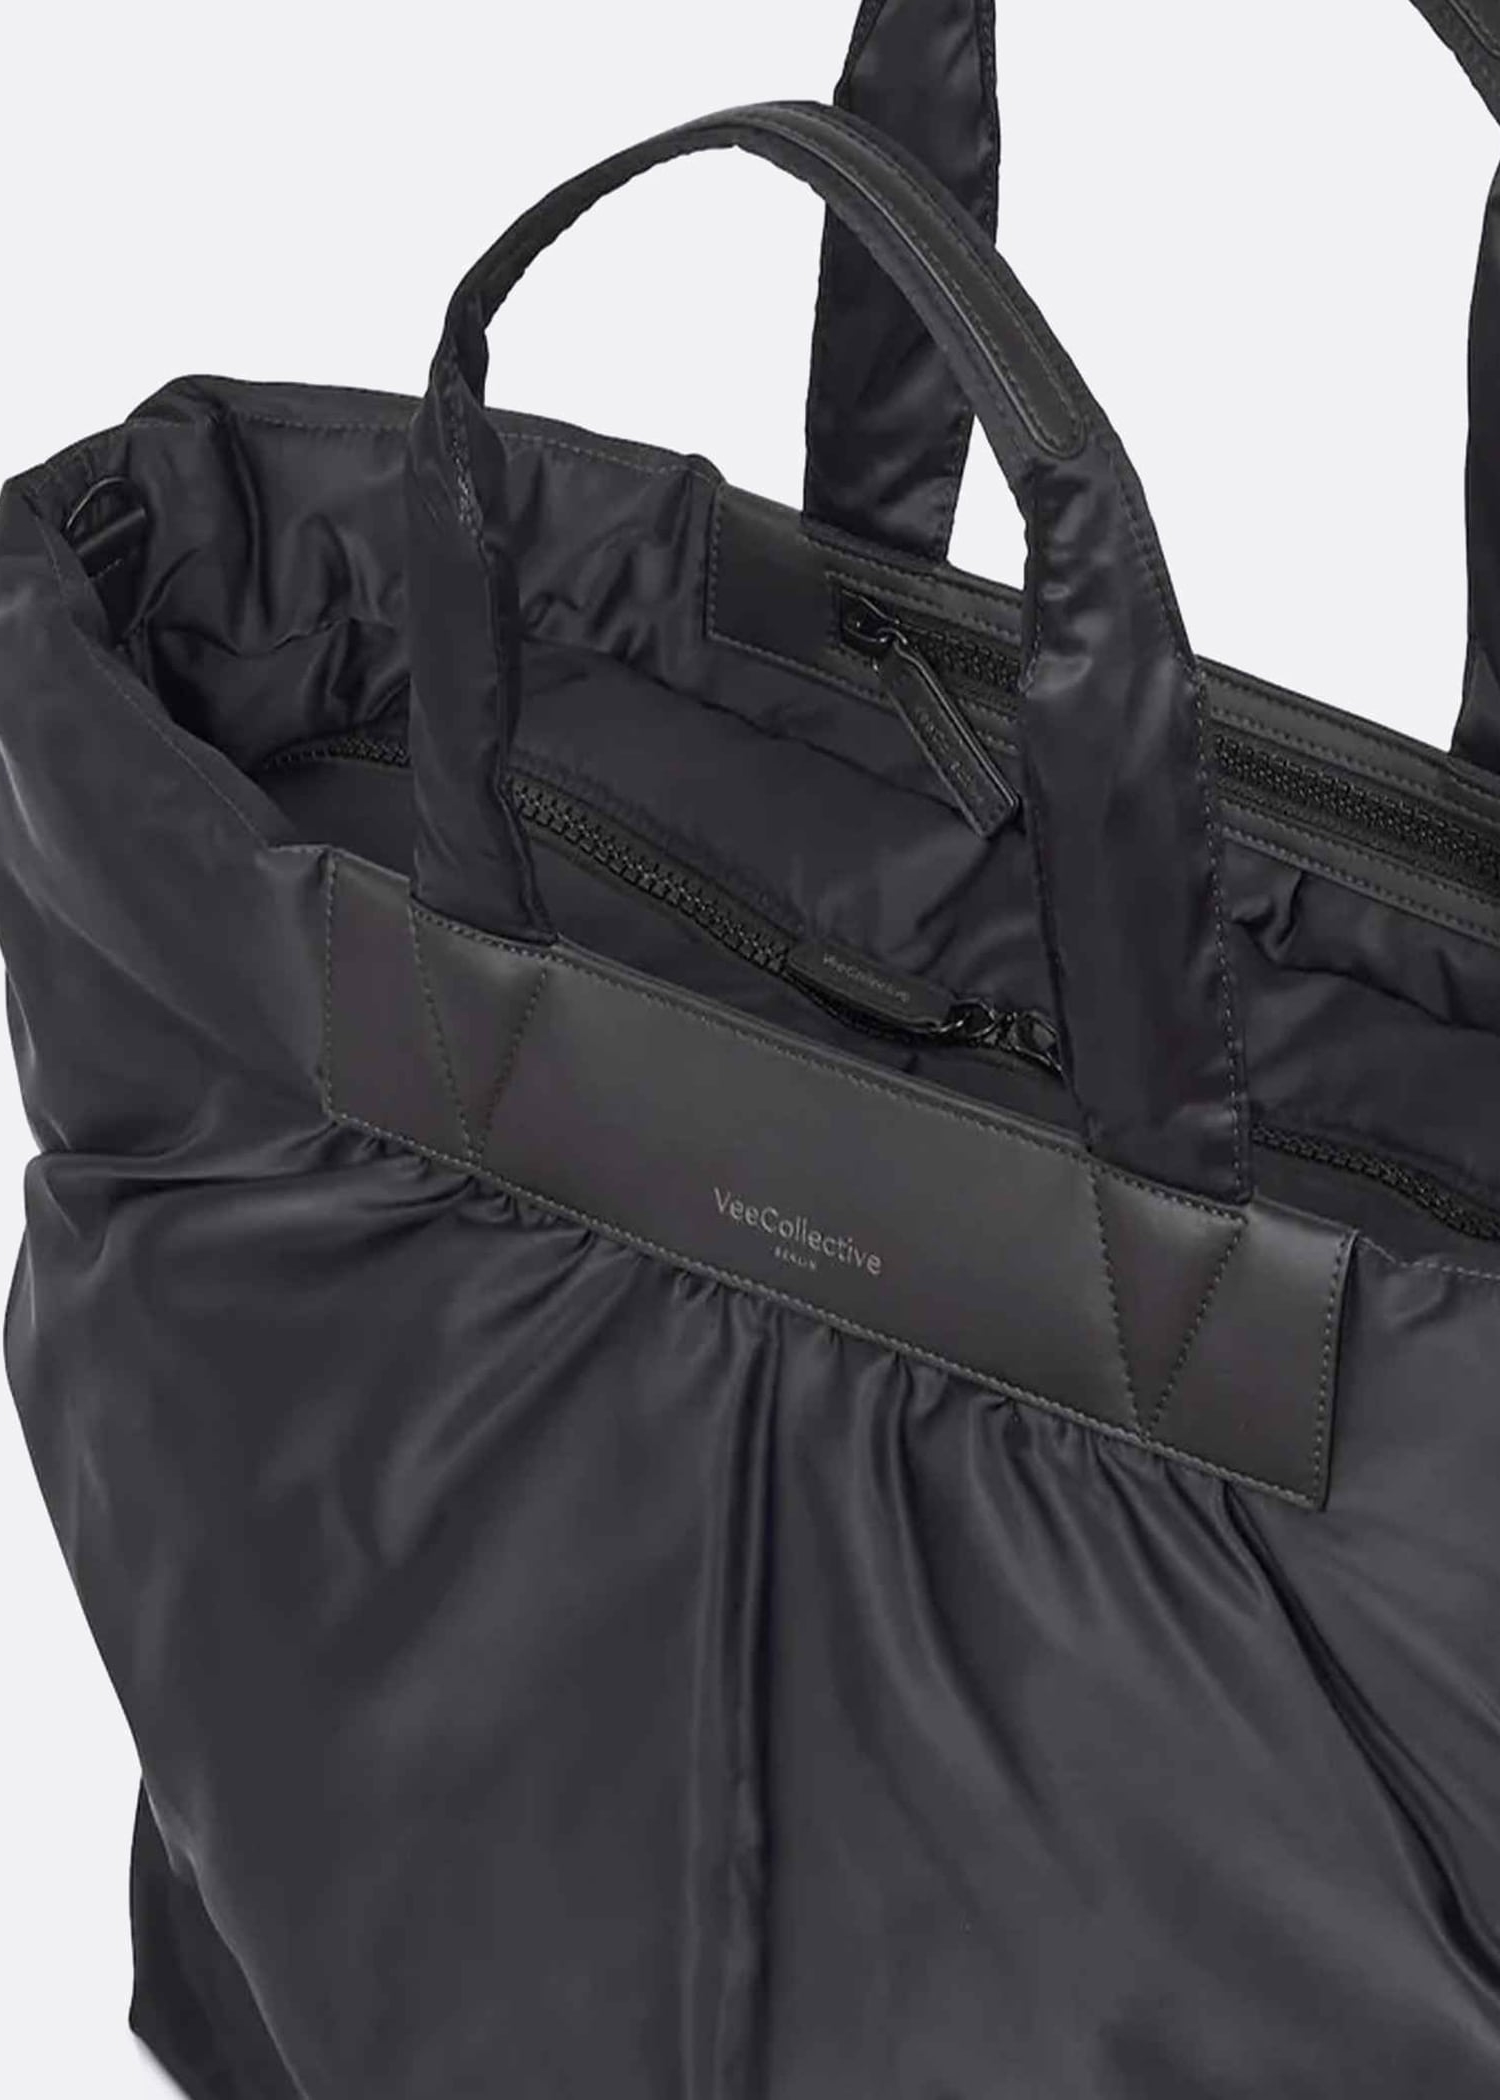 VeeCollective Caba Weekender Black Bag